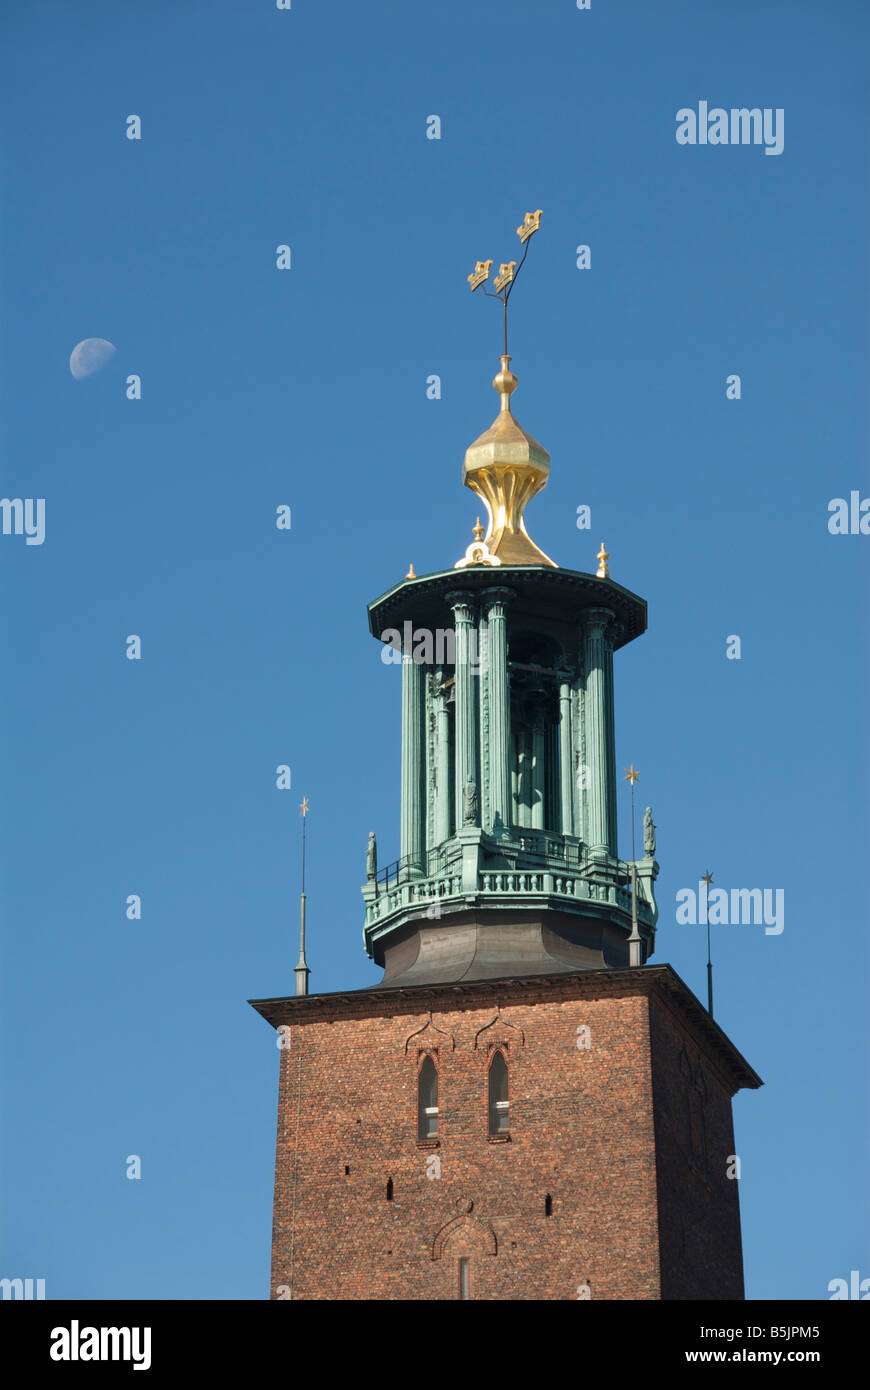 Tre krone emblema City Hall o Stadshuset Kungsholmen Stoccolma Svezia Foto Stock